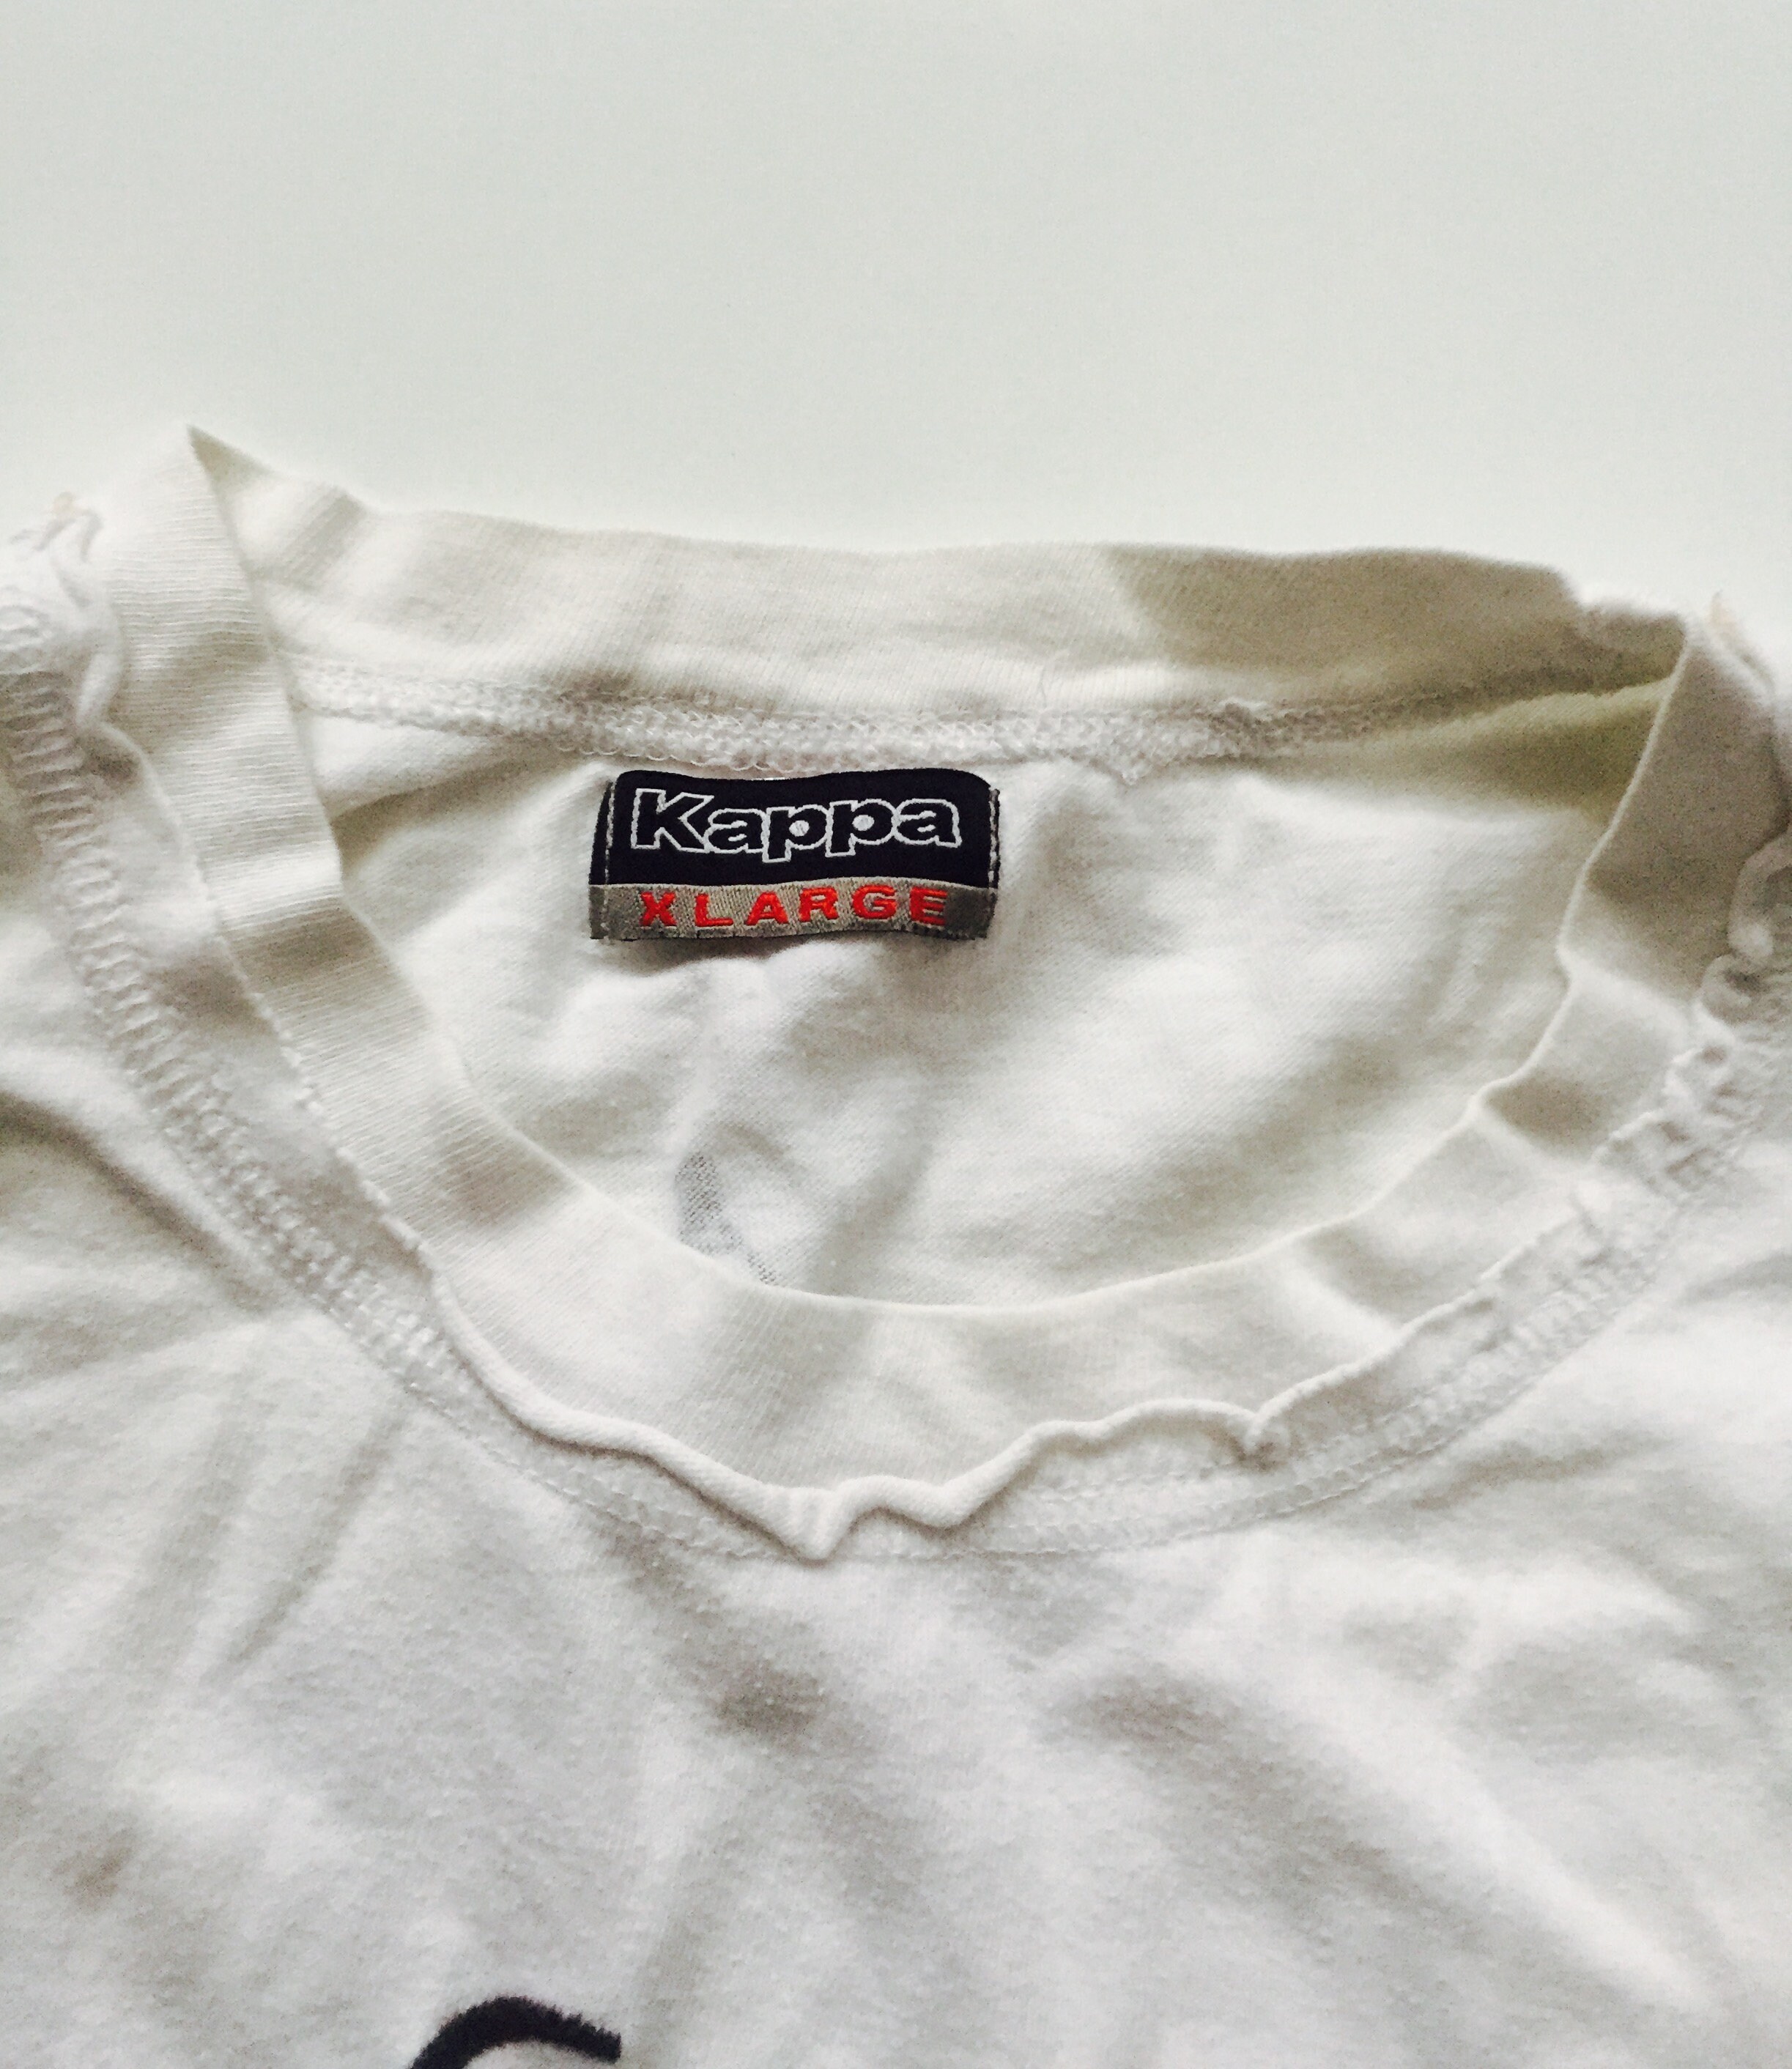 Kappa kappa vintage black t shirt with white embroidered logo size mens medium 